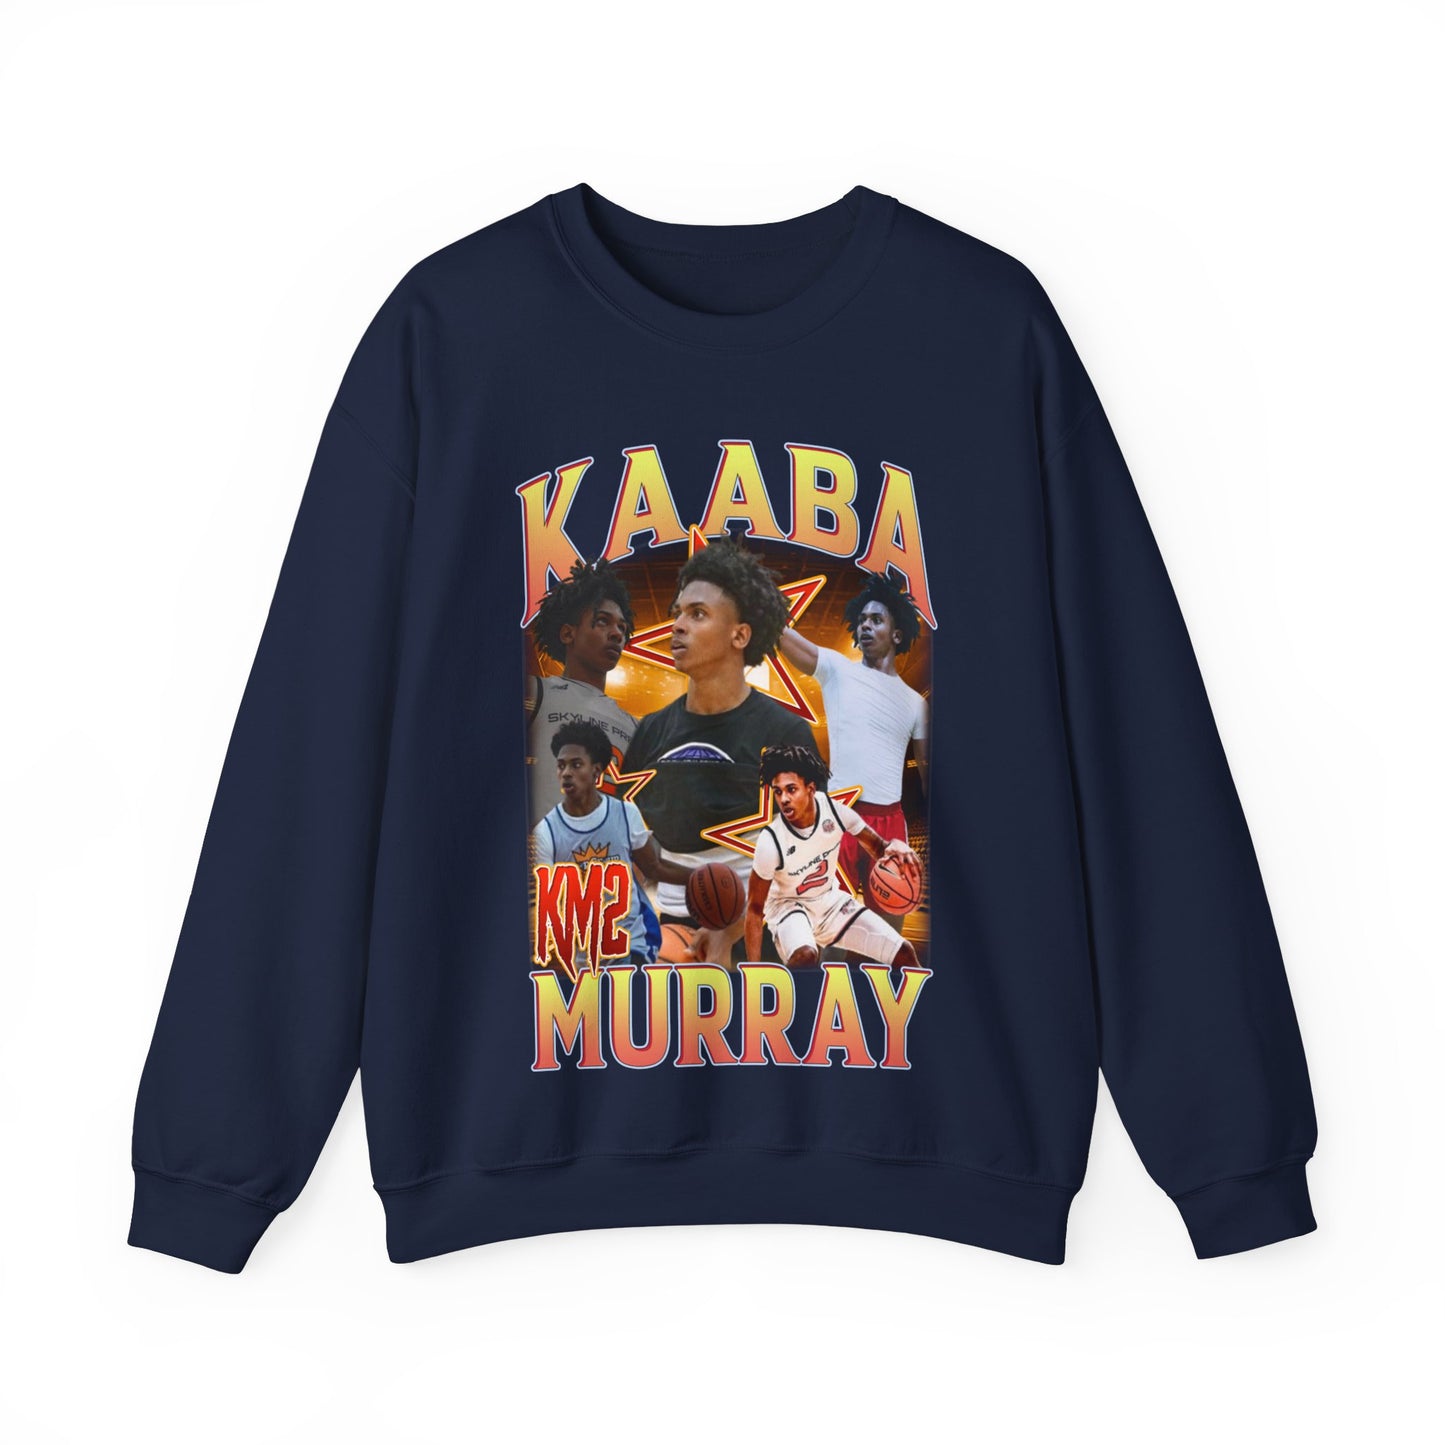 Kaaba Murray Crewneck Sweatshirt